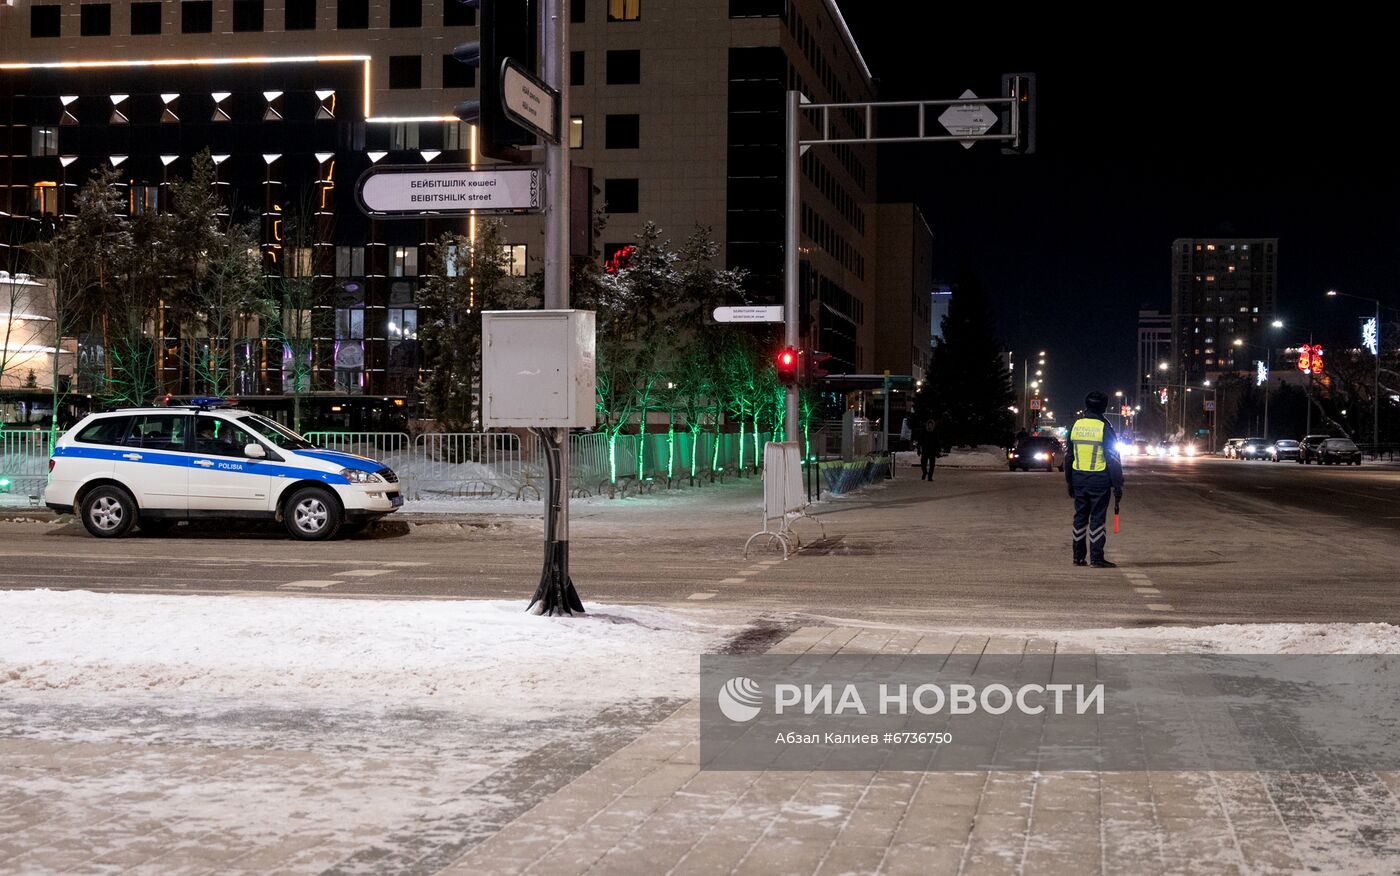 Обстановка в городах Казахстана на фоне протестов